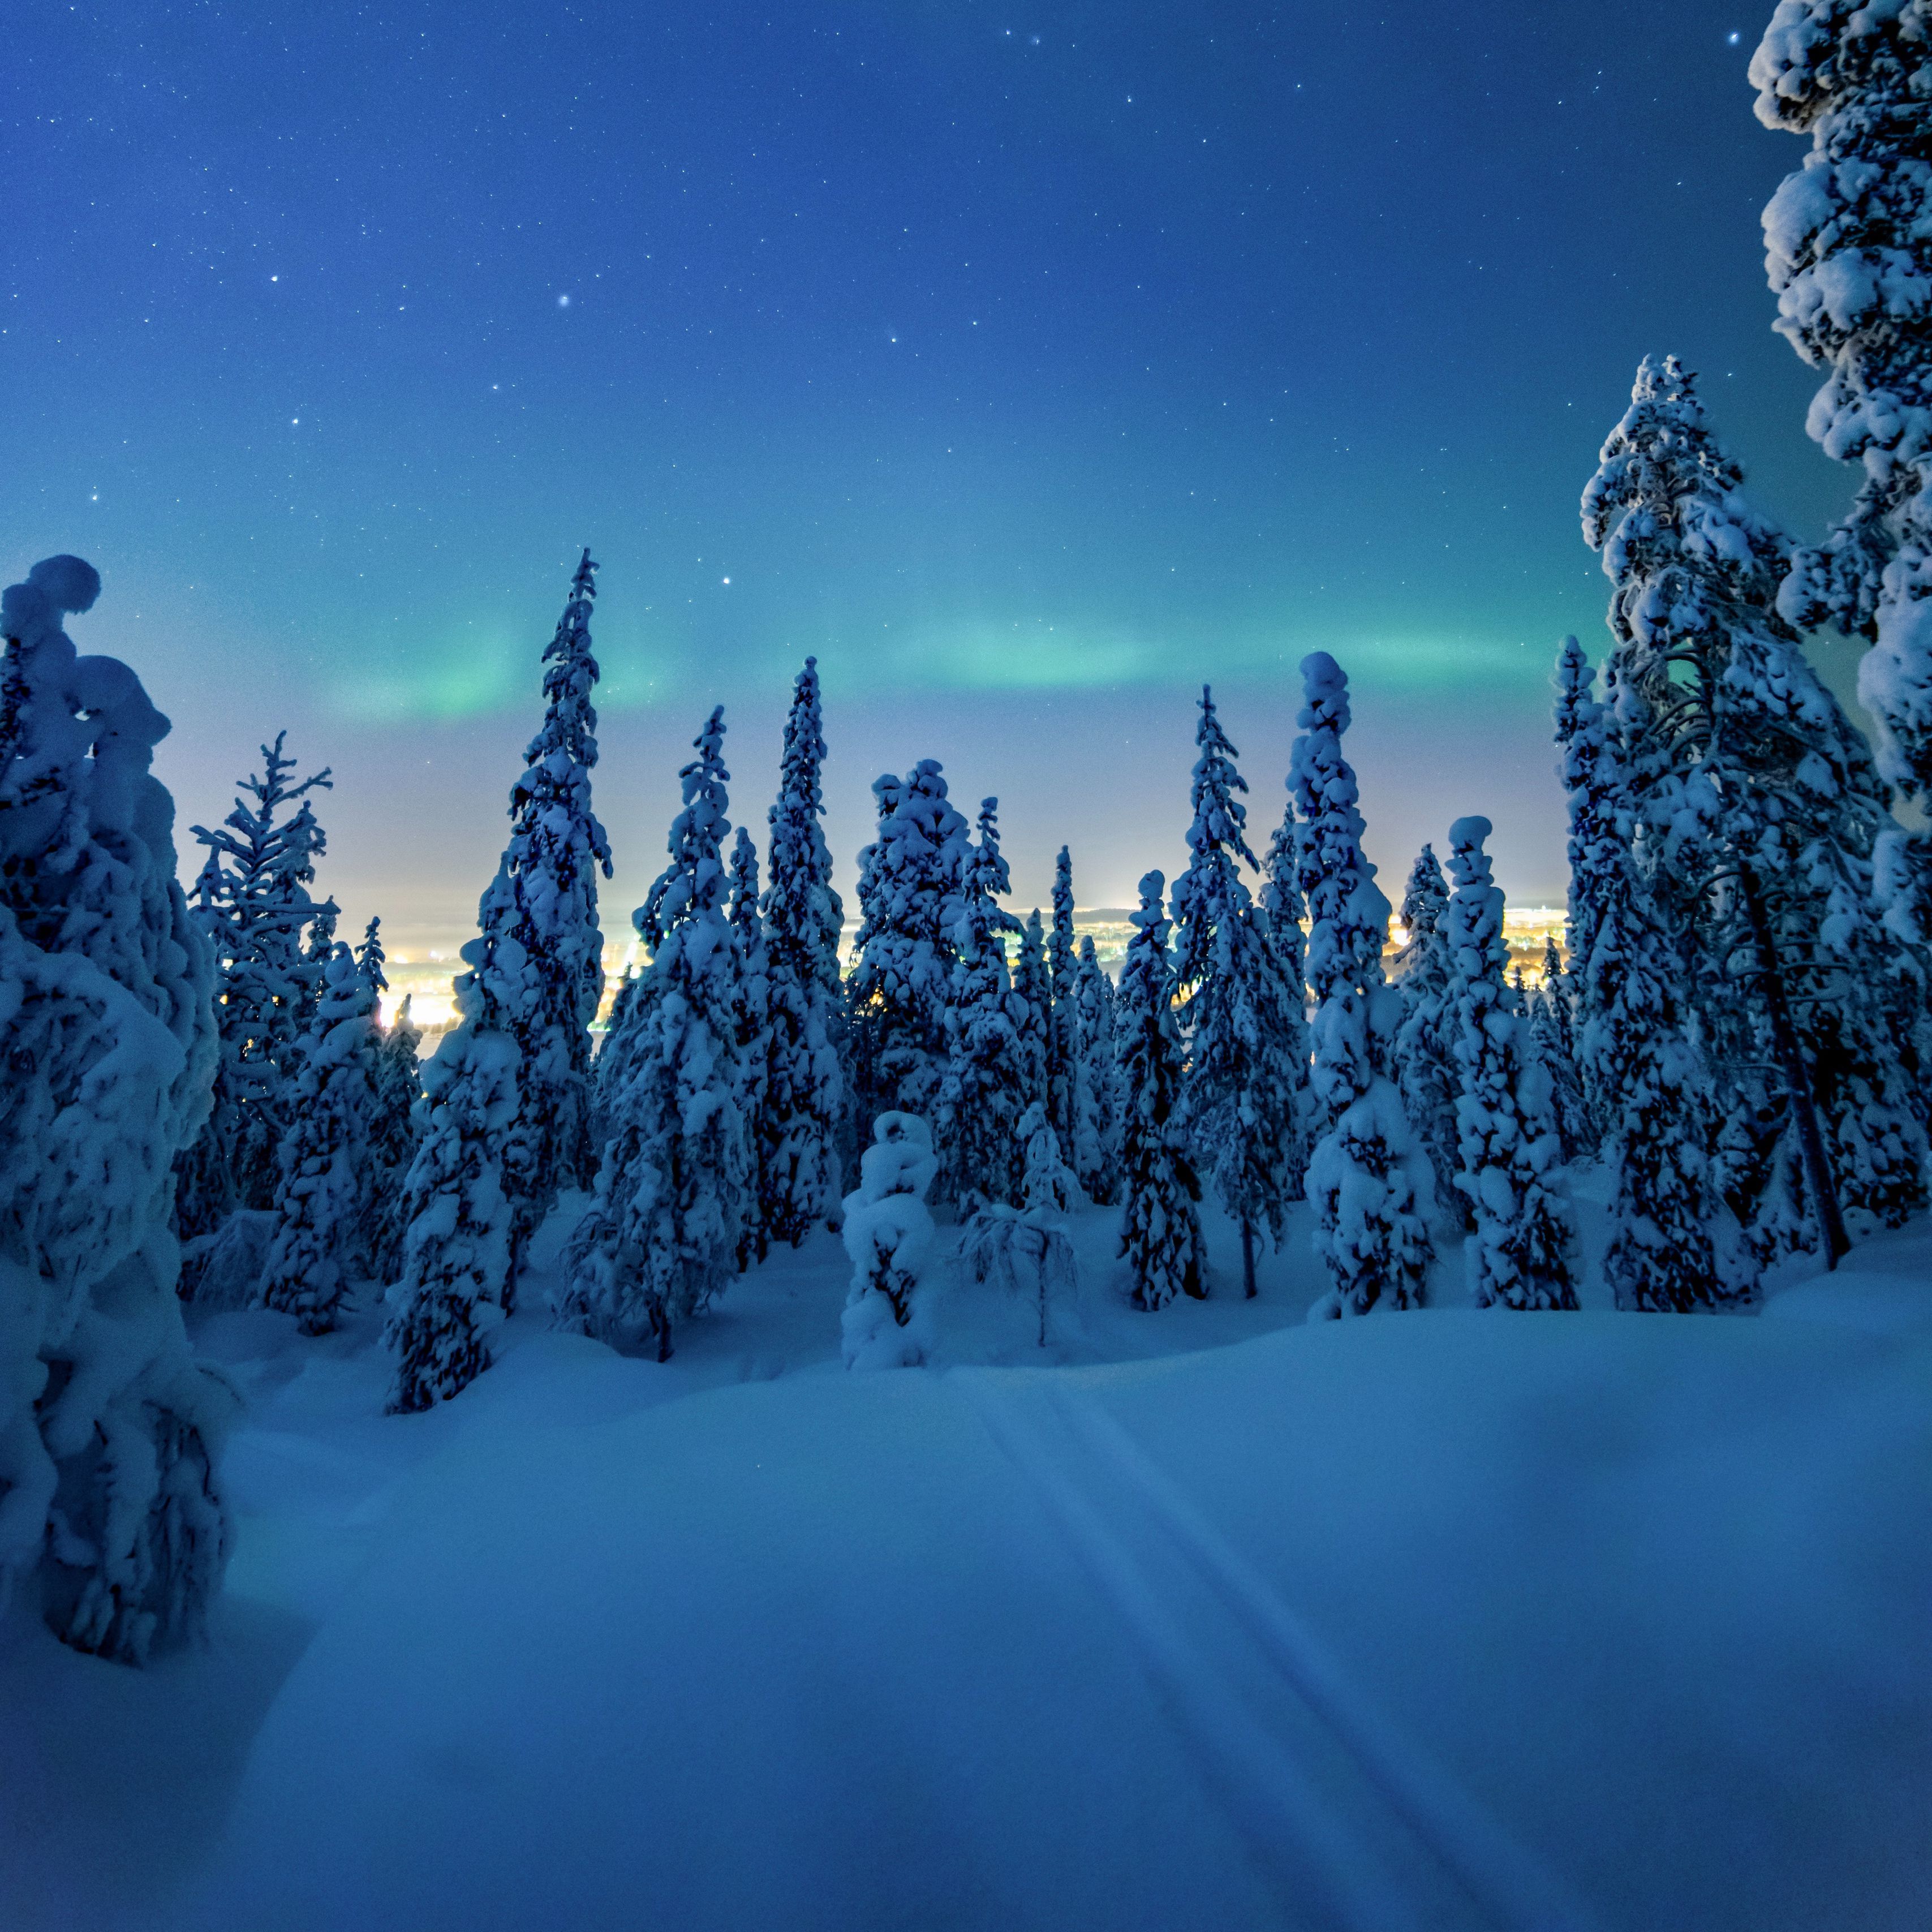 Download wallpaper 3415x3415 trees, snow, winter, night, landscape ipad pro 12.9 retina for parallax HD background